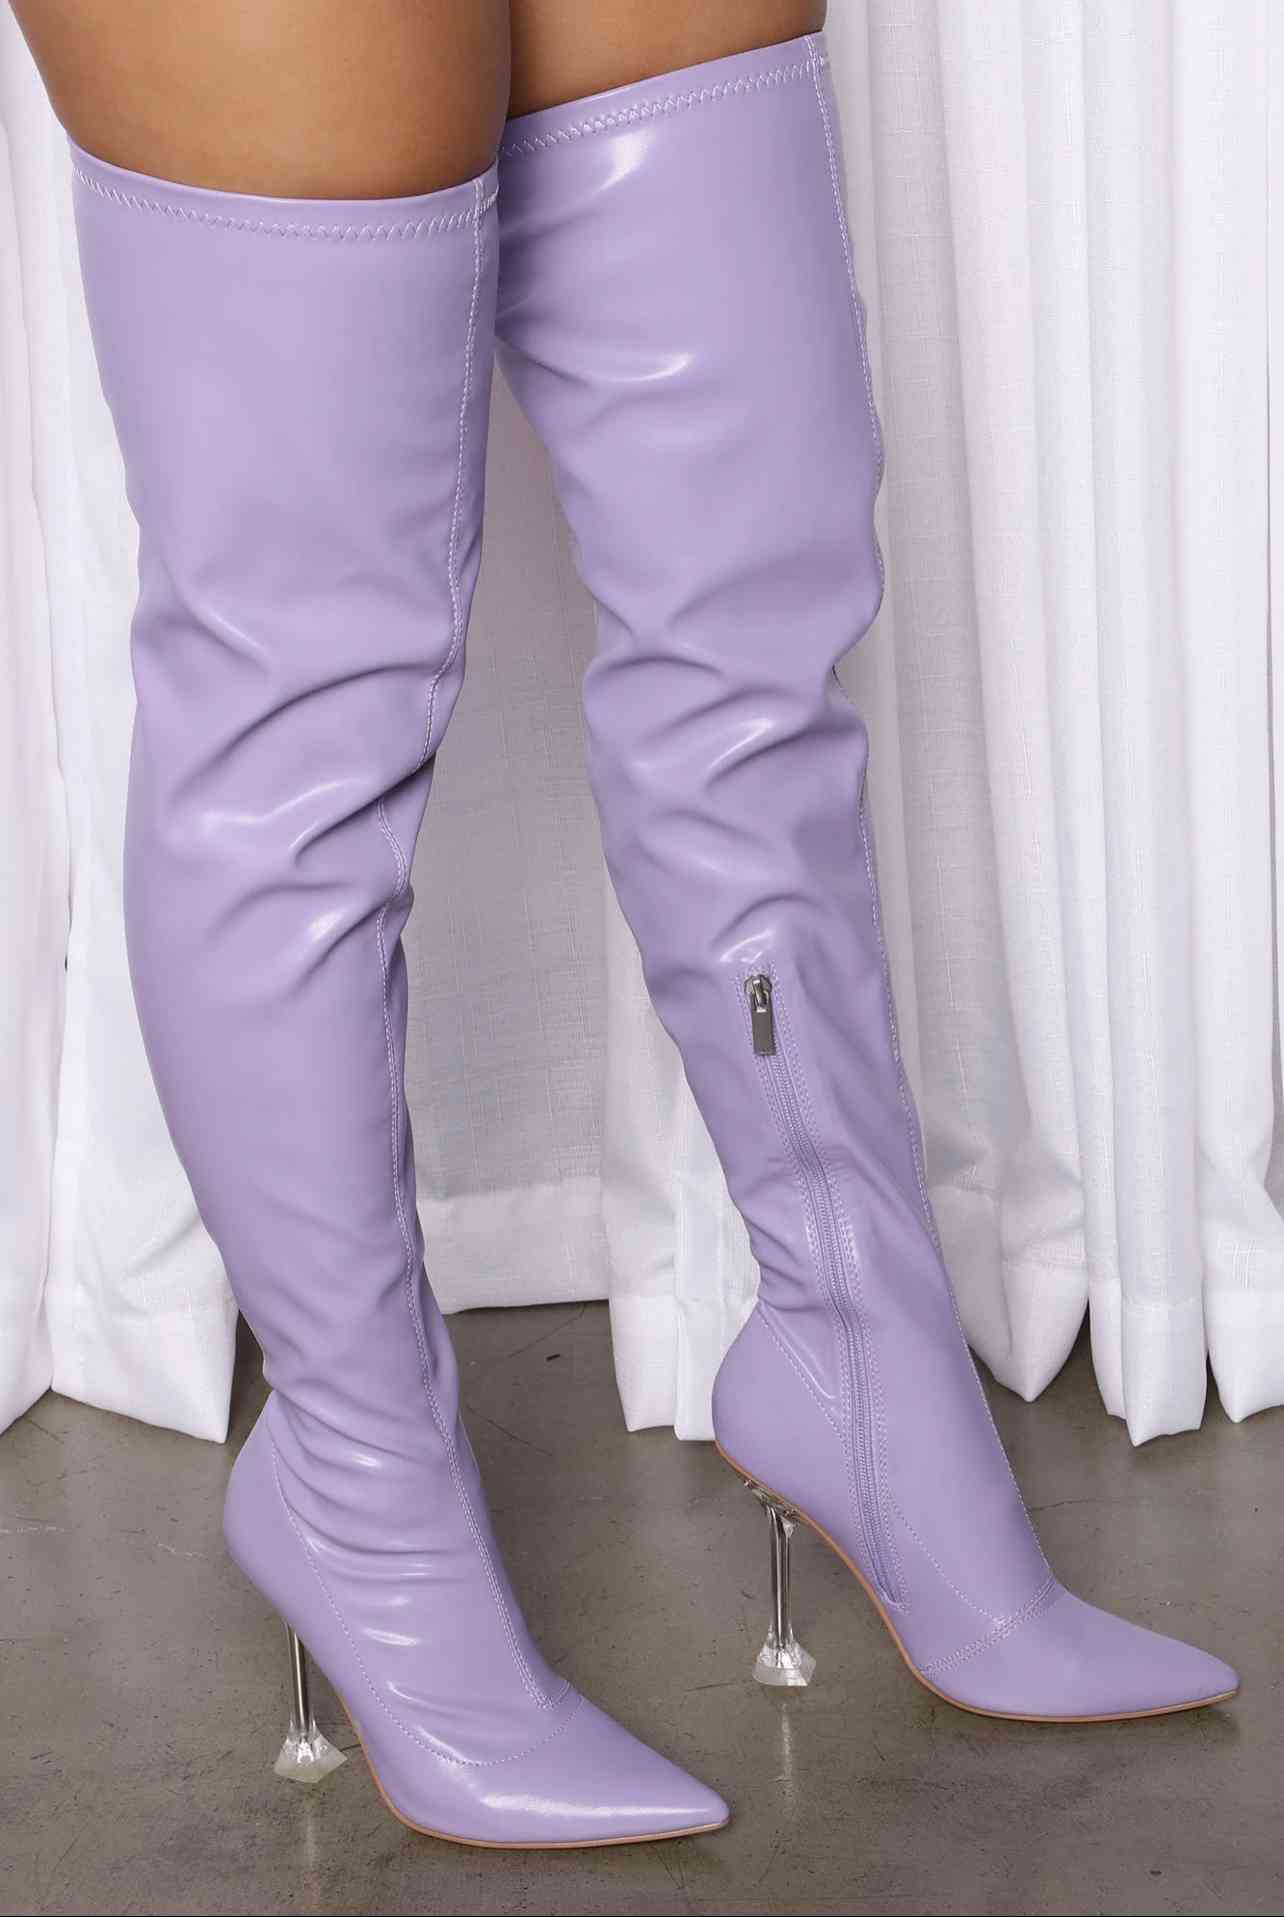 Lavender Upper West Side Over The Knee Boots